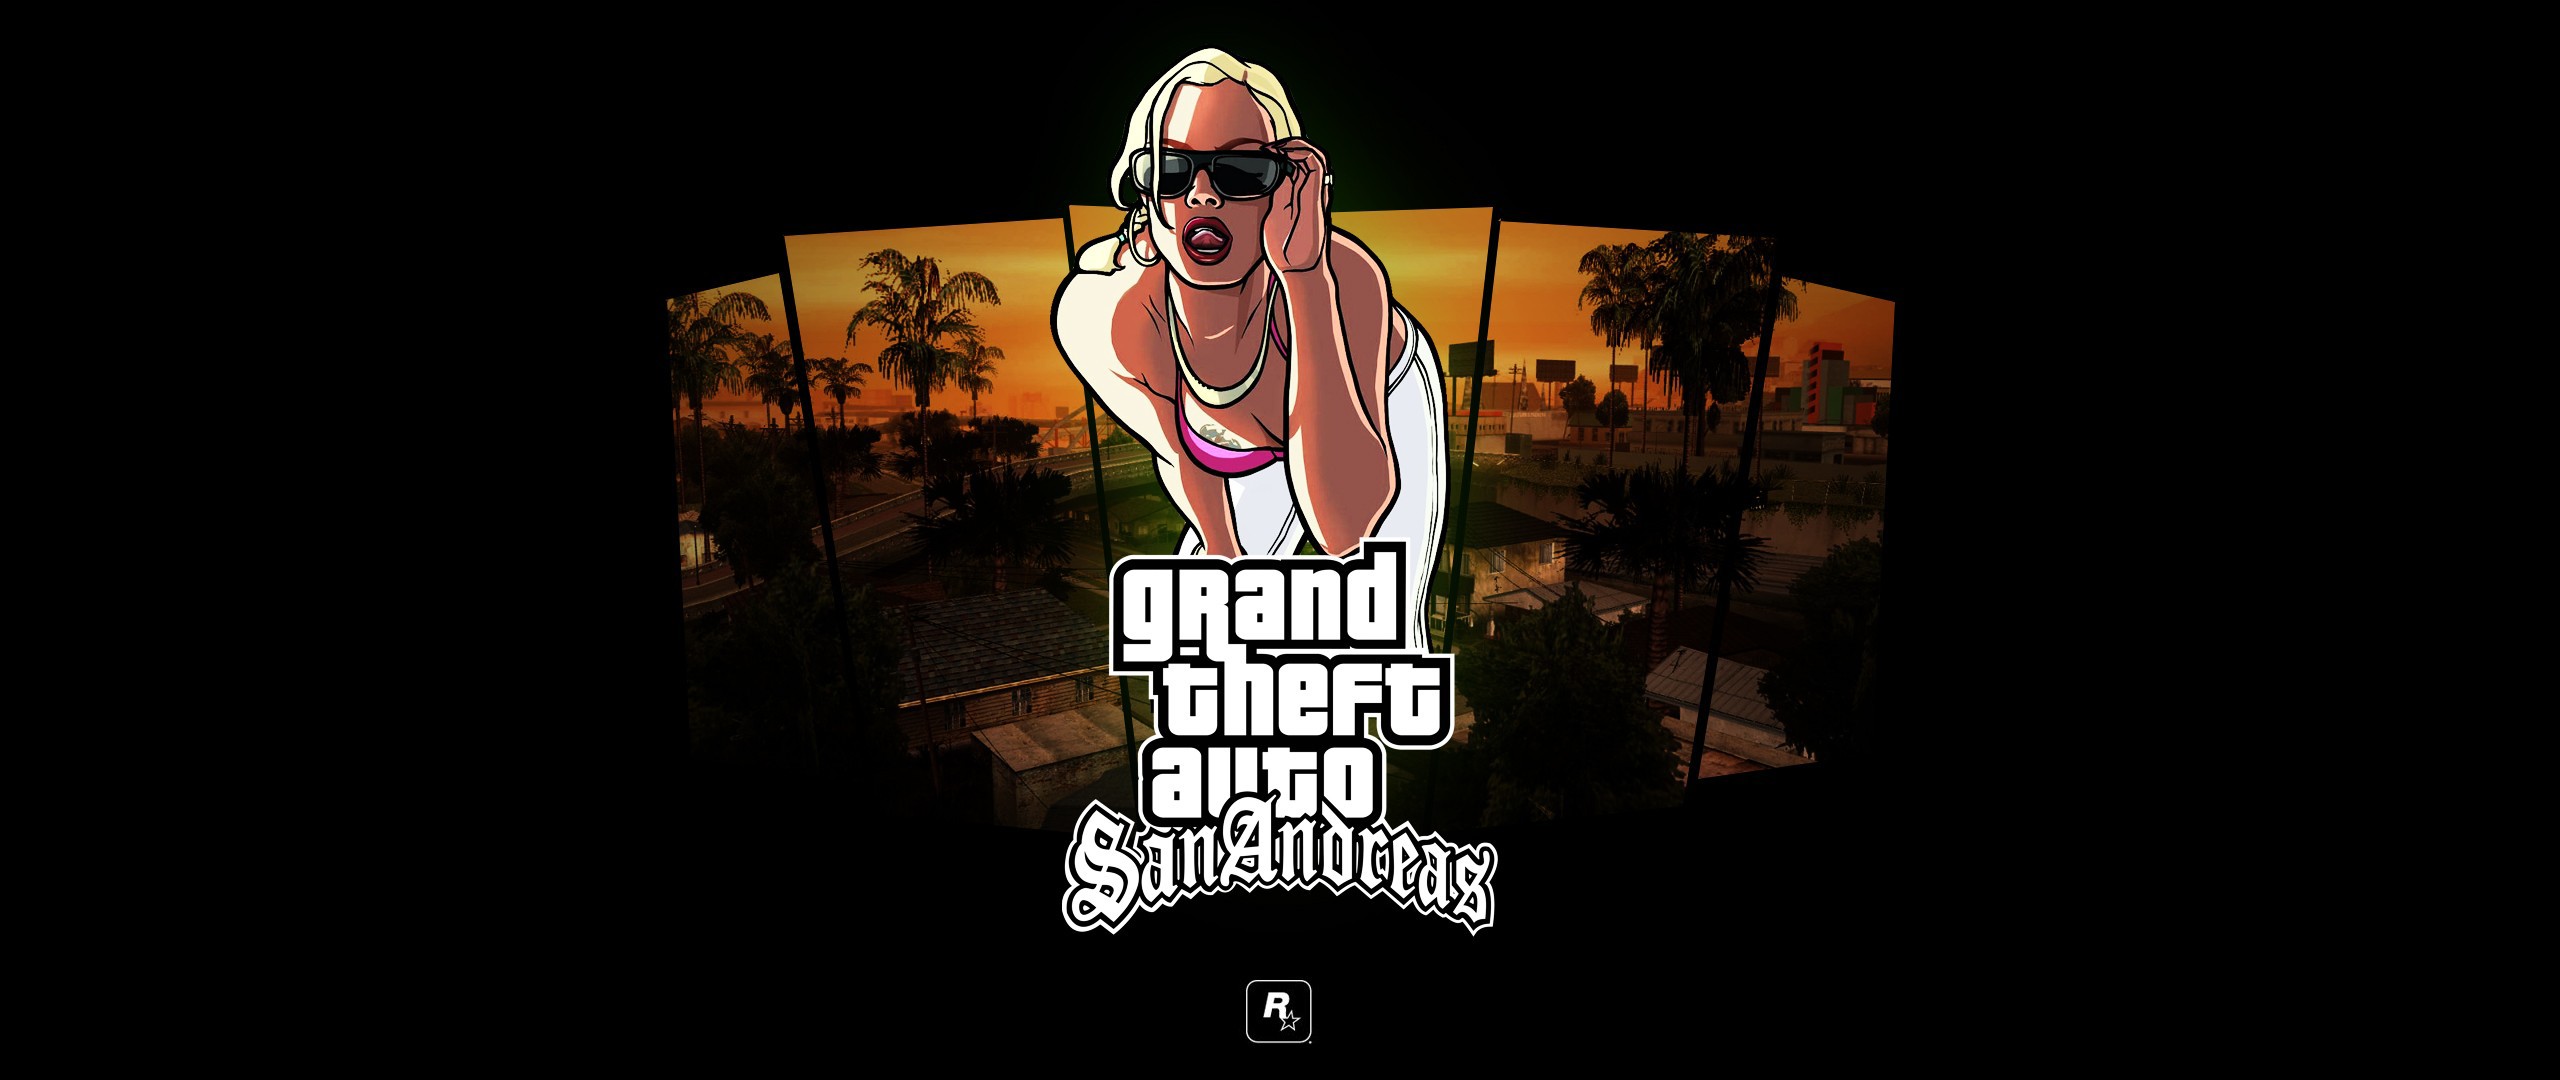 ultra wide, Video games, Grand Theft Auto, Grand Theft Auto San Andreas Wallpaper